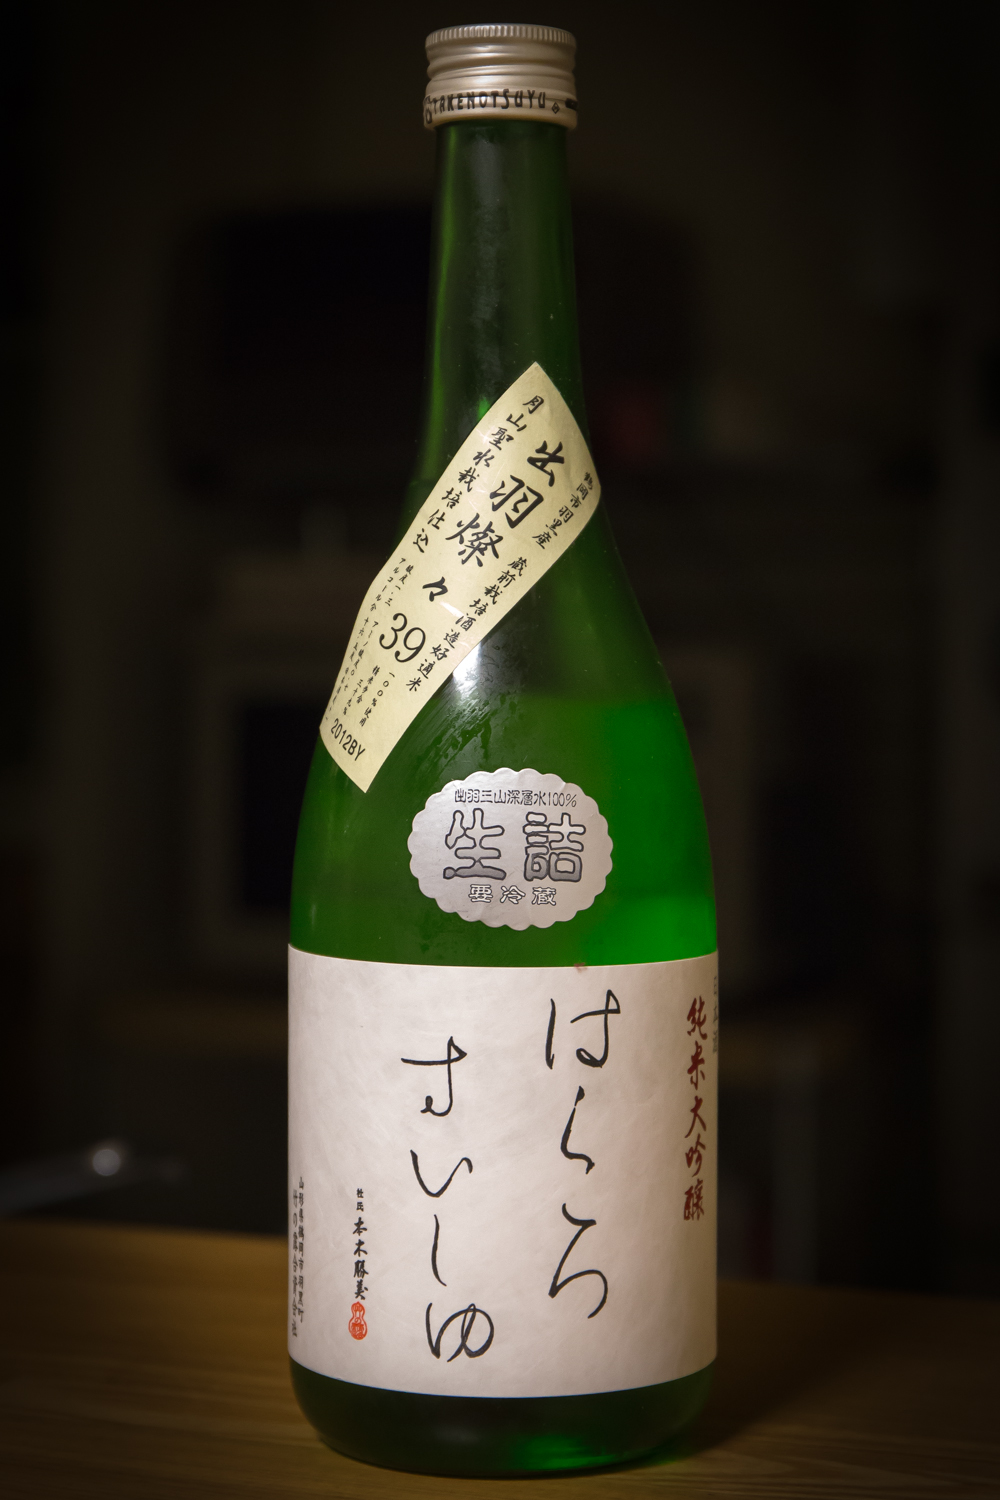 Dancyu 日本酒